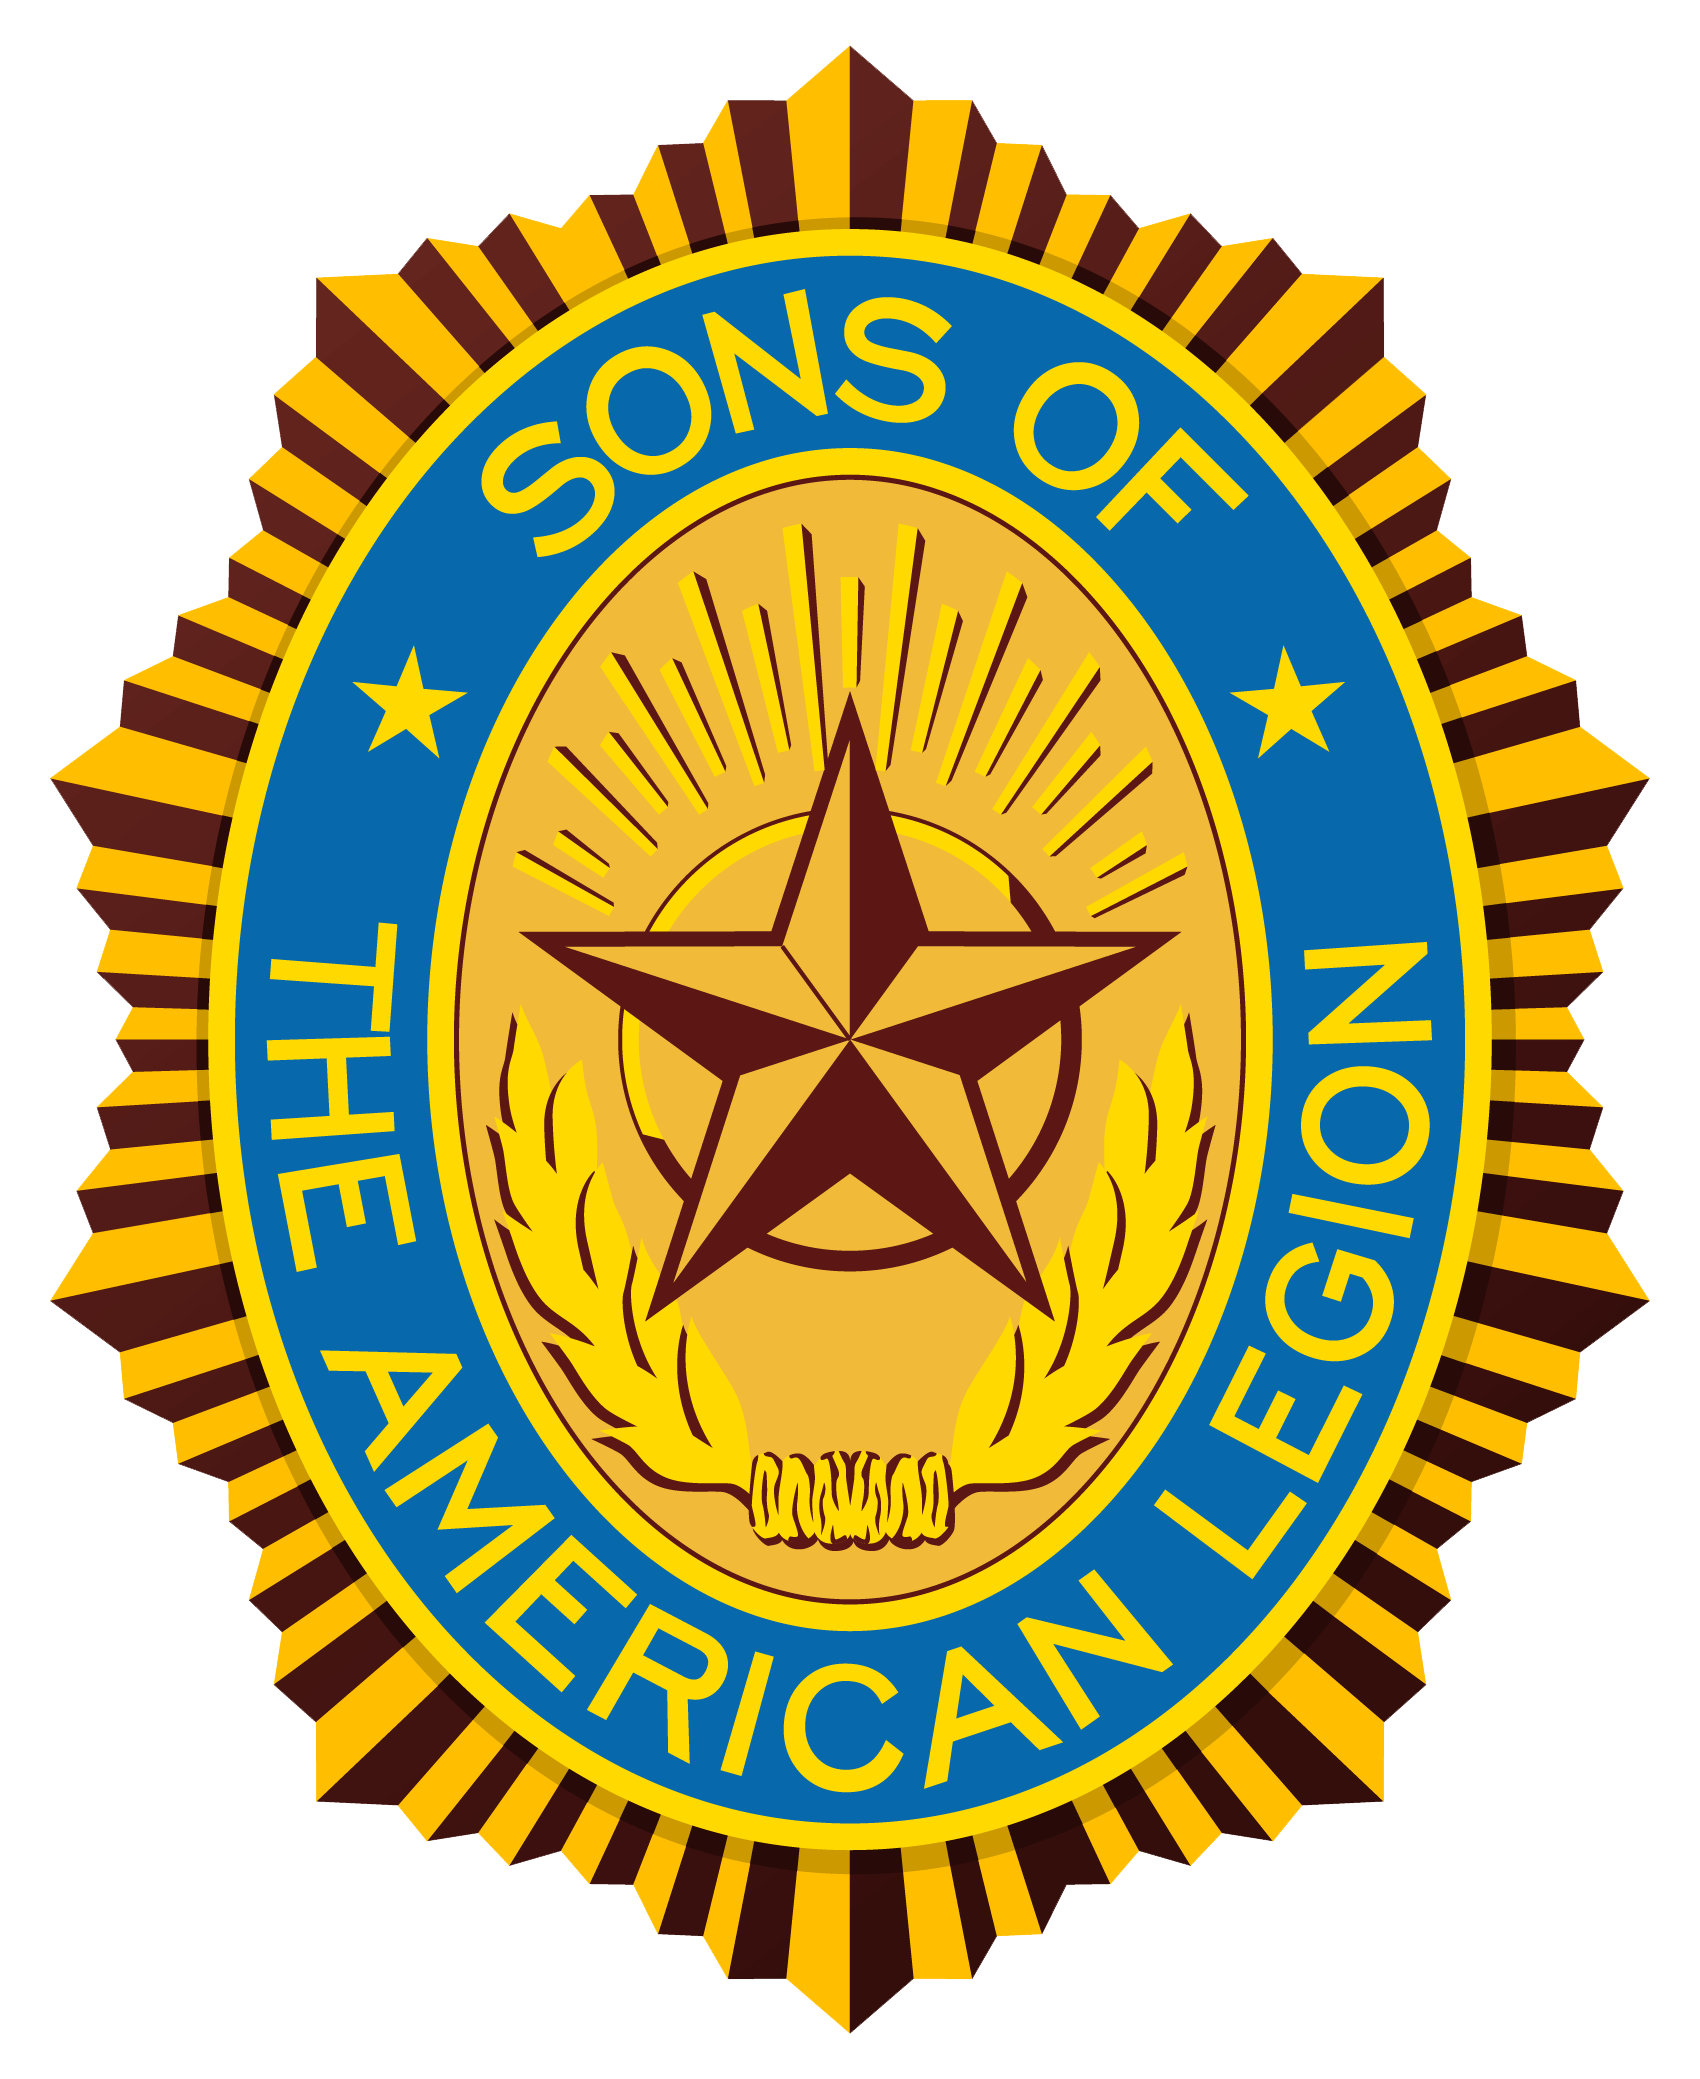 Son's of the American Legion